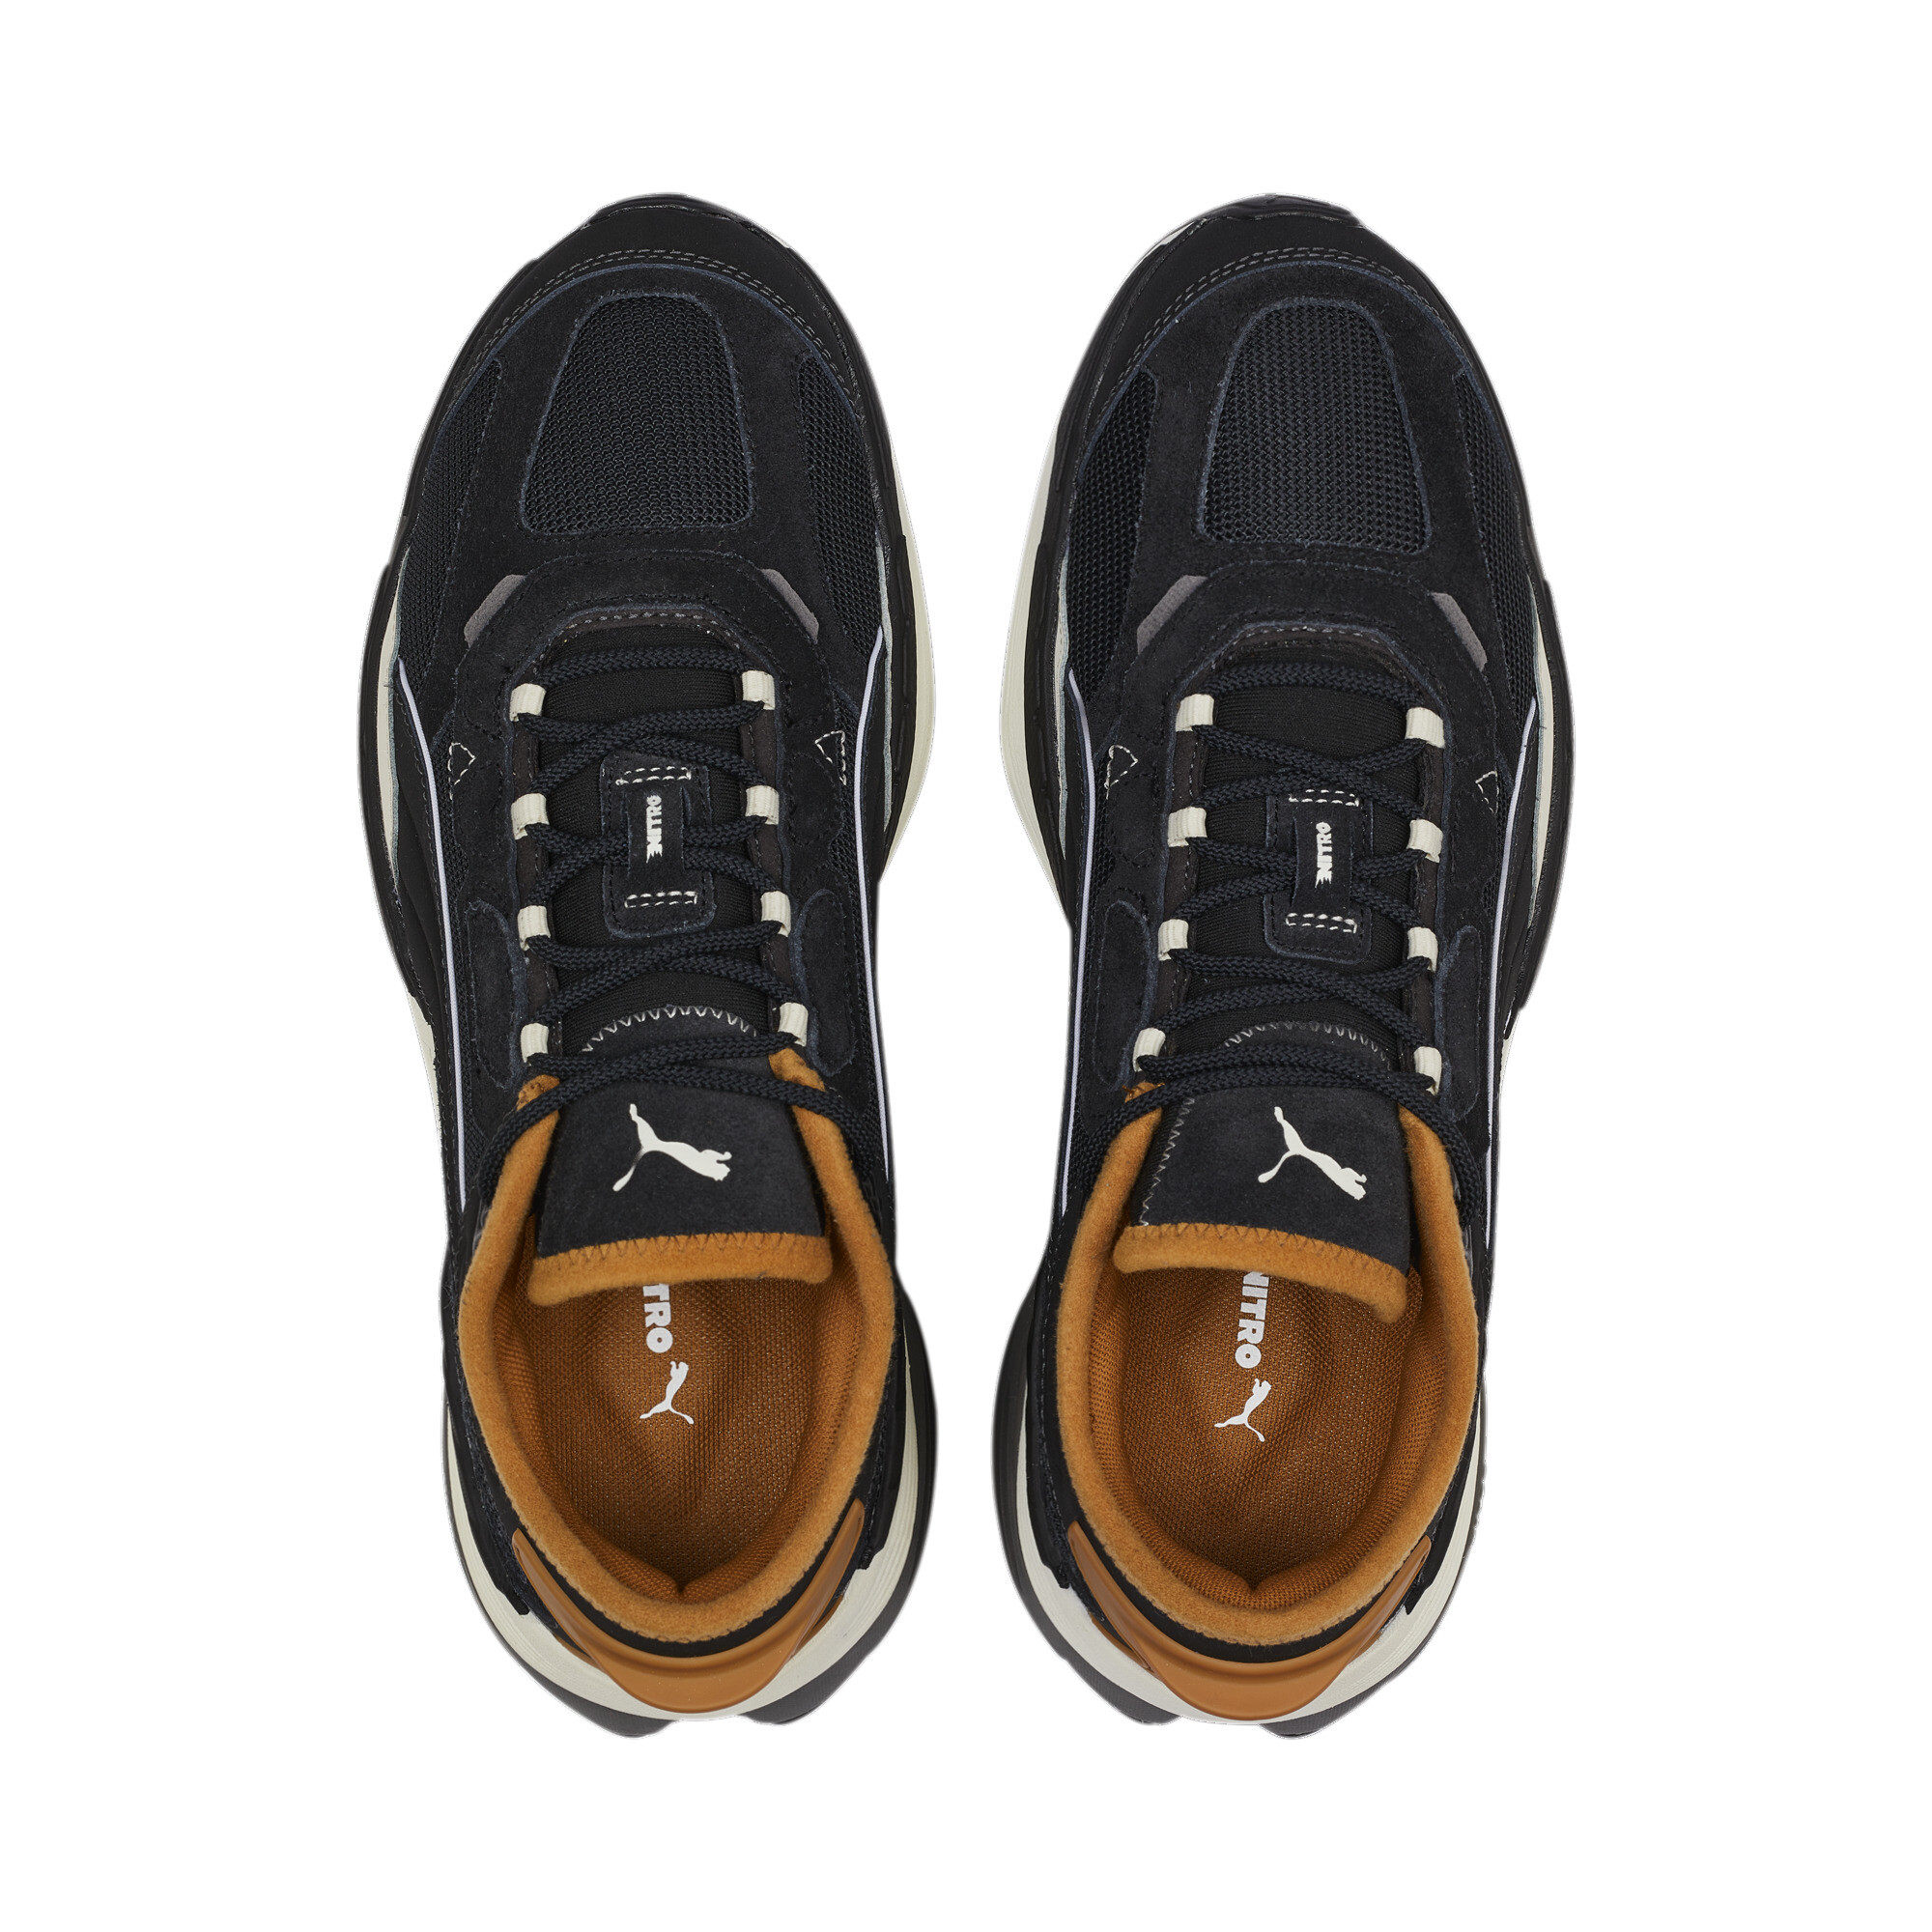 Men's PUMA Extent Nitro Heritage Sneakers In Black, Size EU 40.5